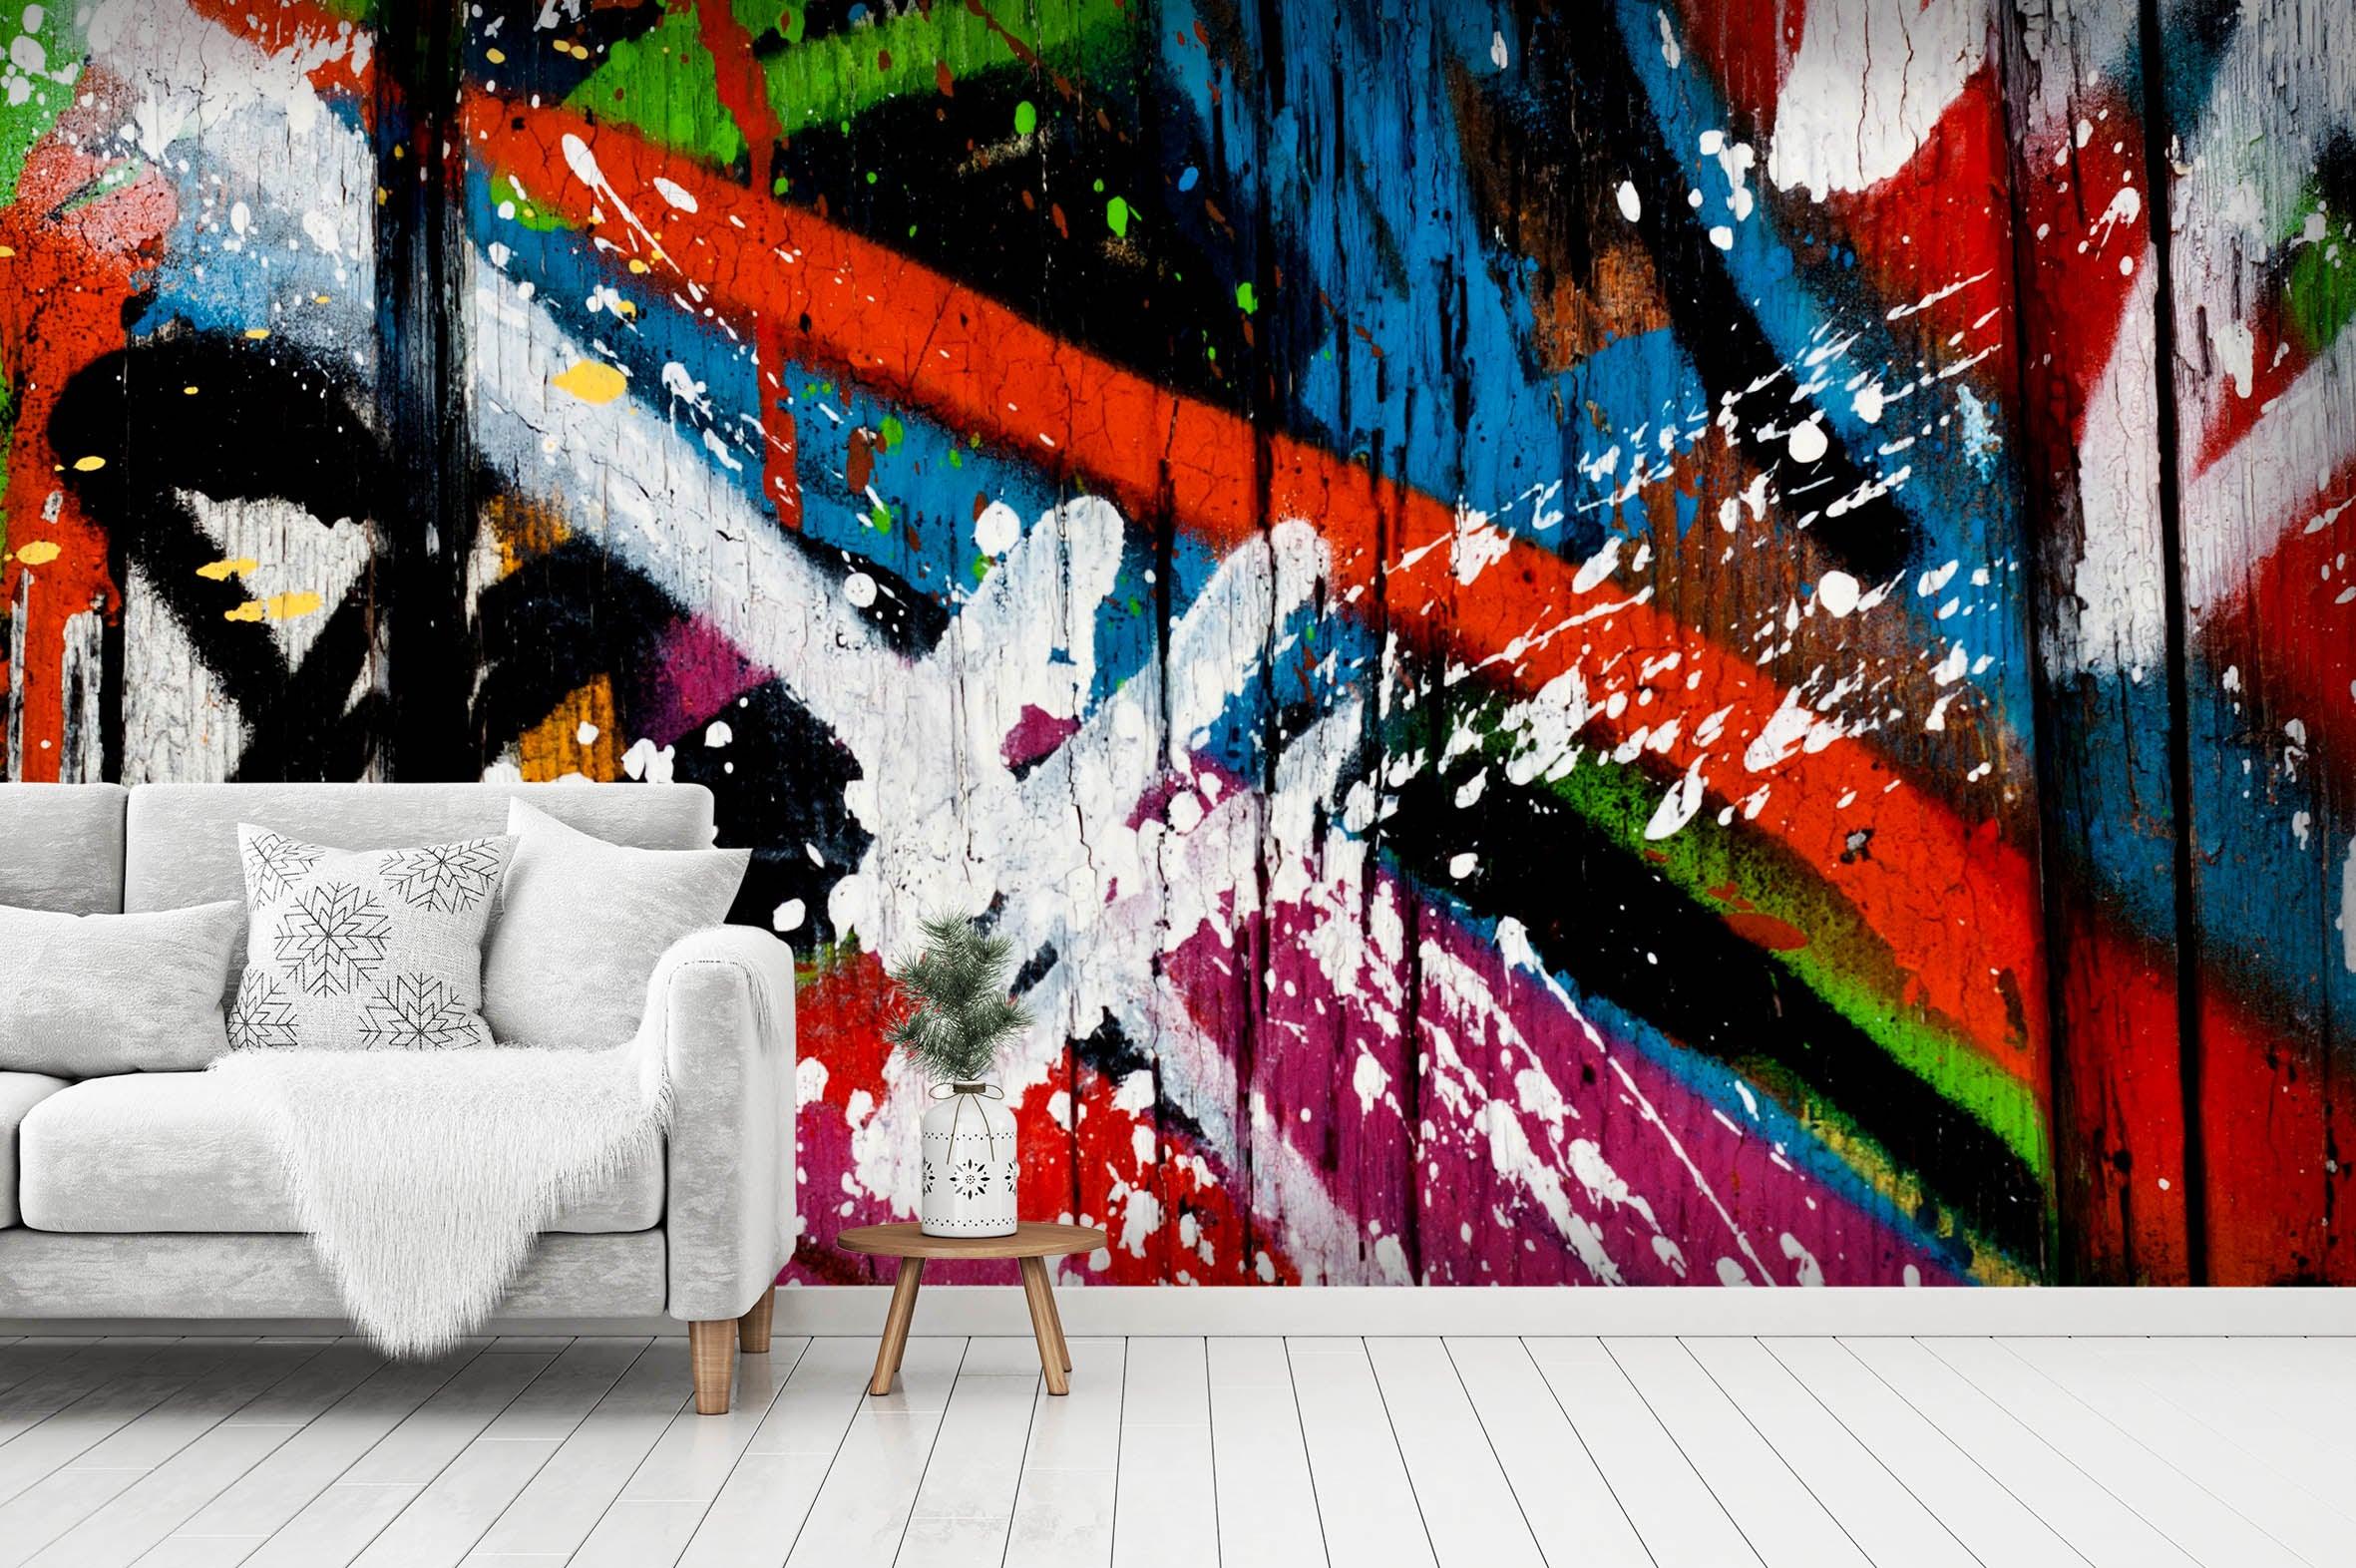 3D Abstract Colorful Graffiti Wall Mural Wallpaper 36- Jess Art Decoration